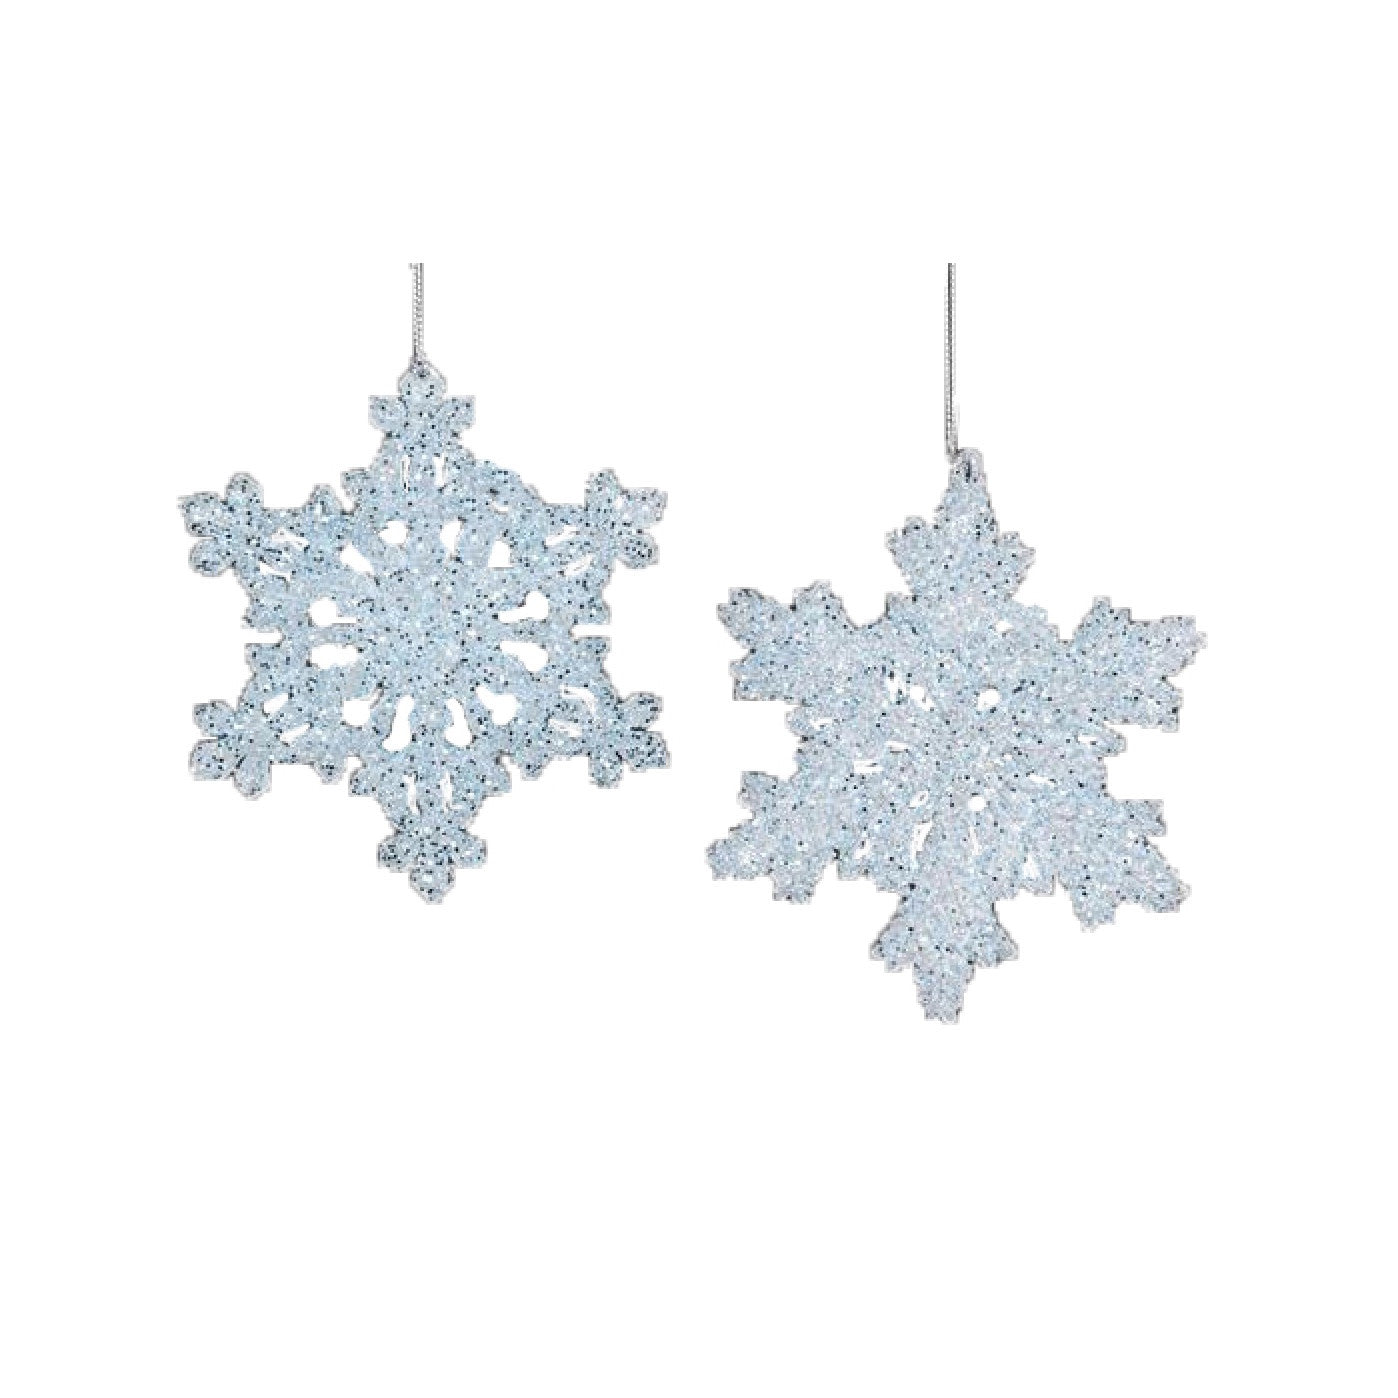 "Aqua Snowflake" Christmas